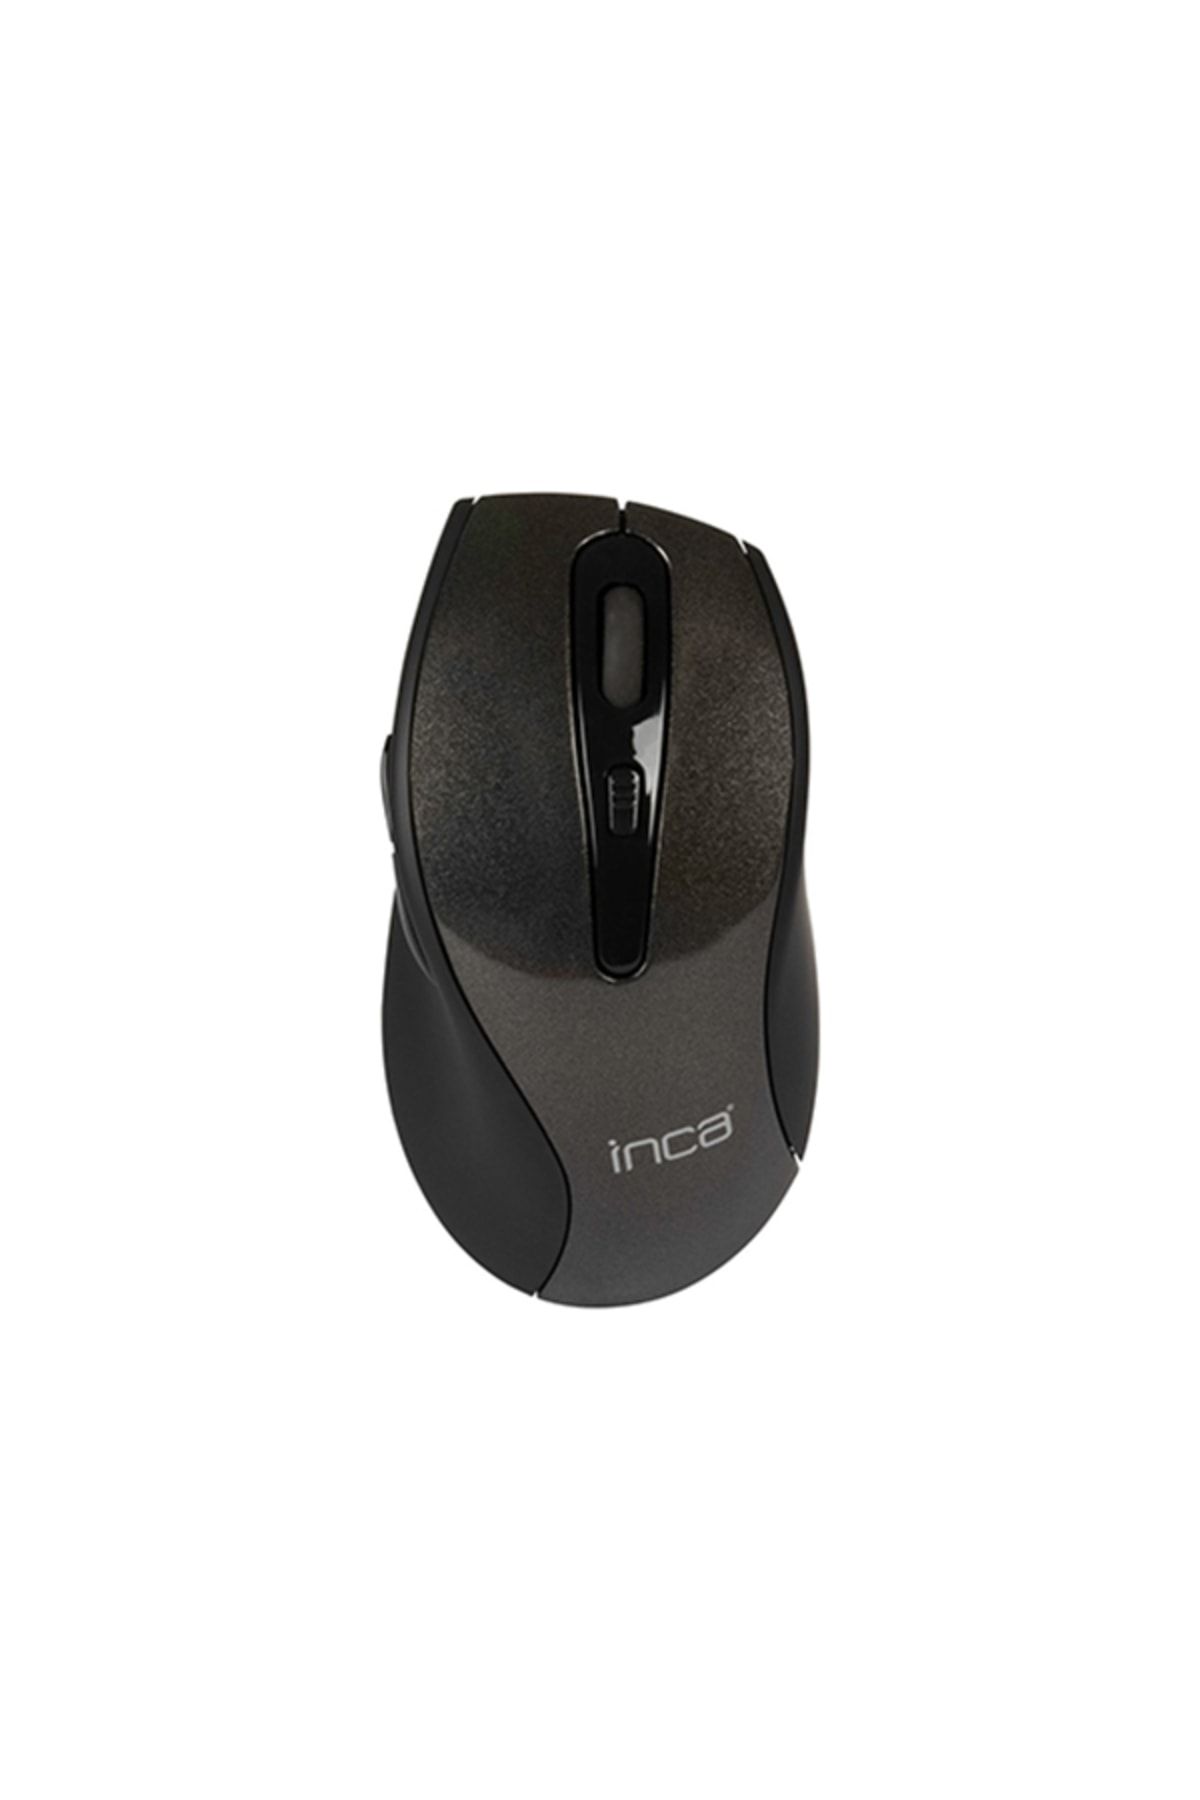 Inca Iwm505 2.4ghz 1600 Dpi Nano Laser Kablolu Mouse